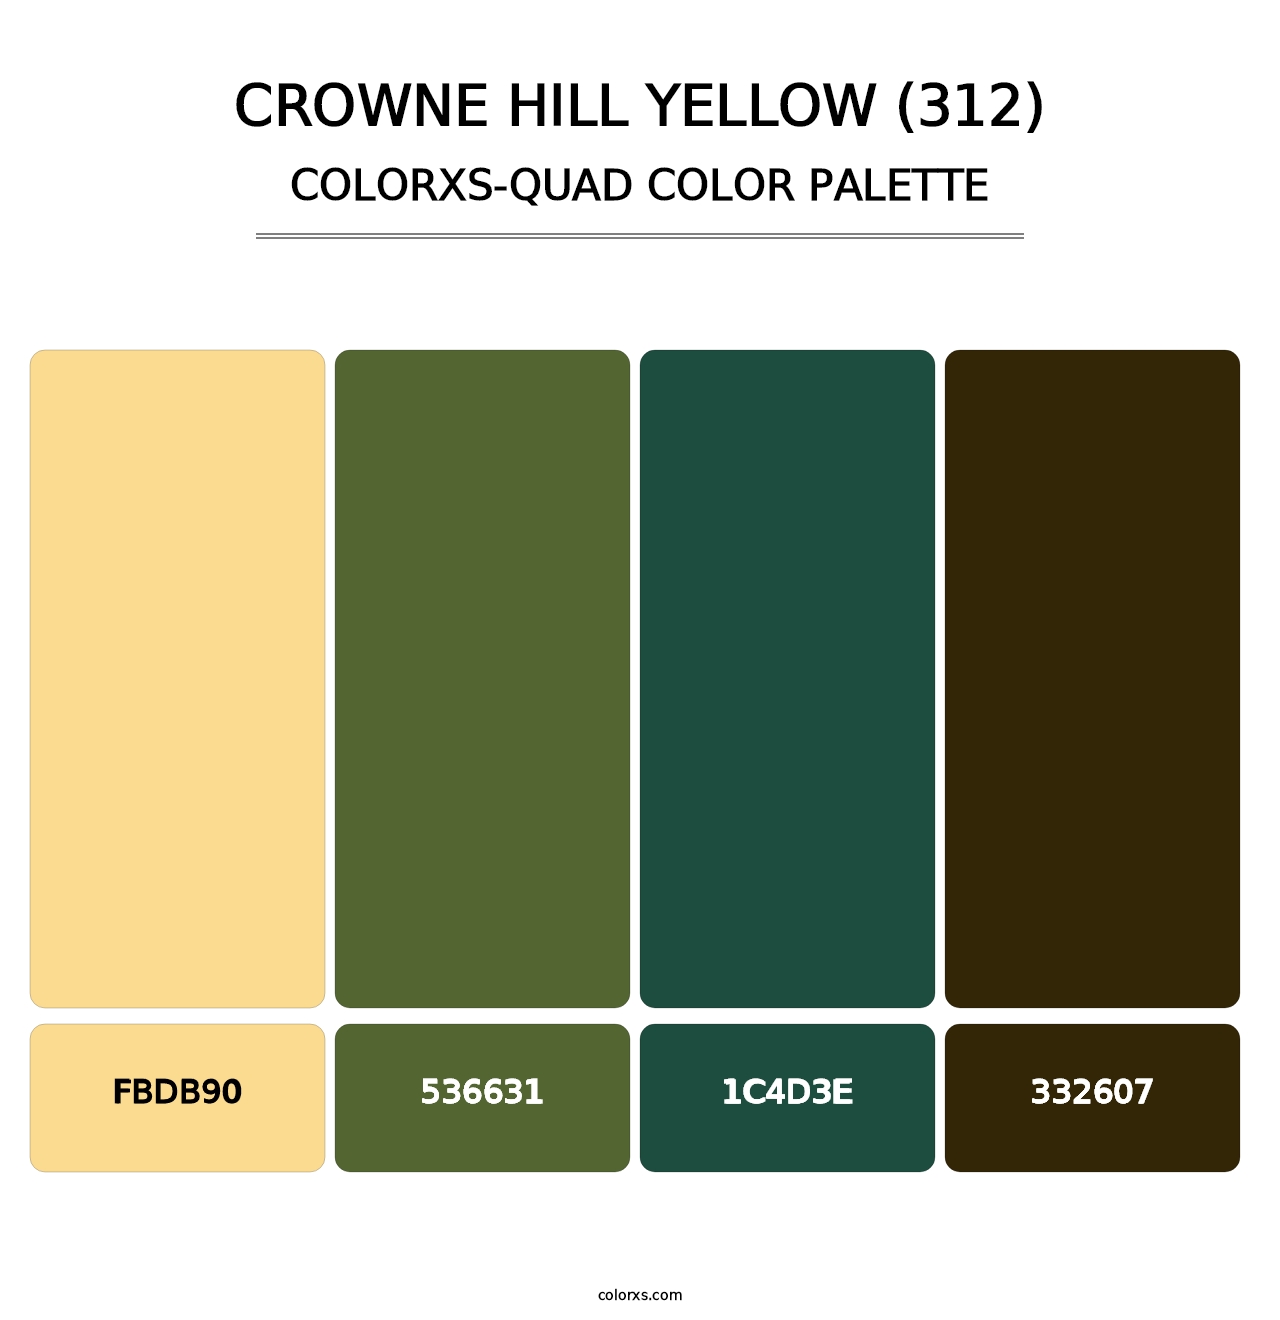 Crowne Hill Yellow (312) - Colorxs Quad Palette